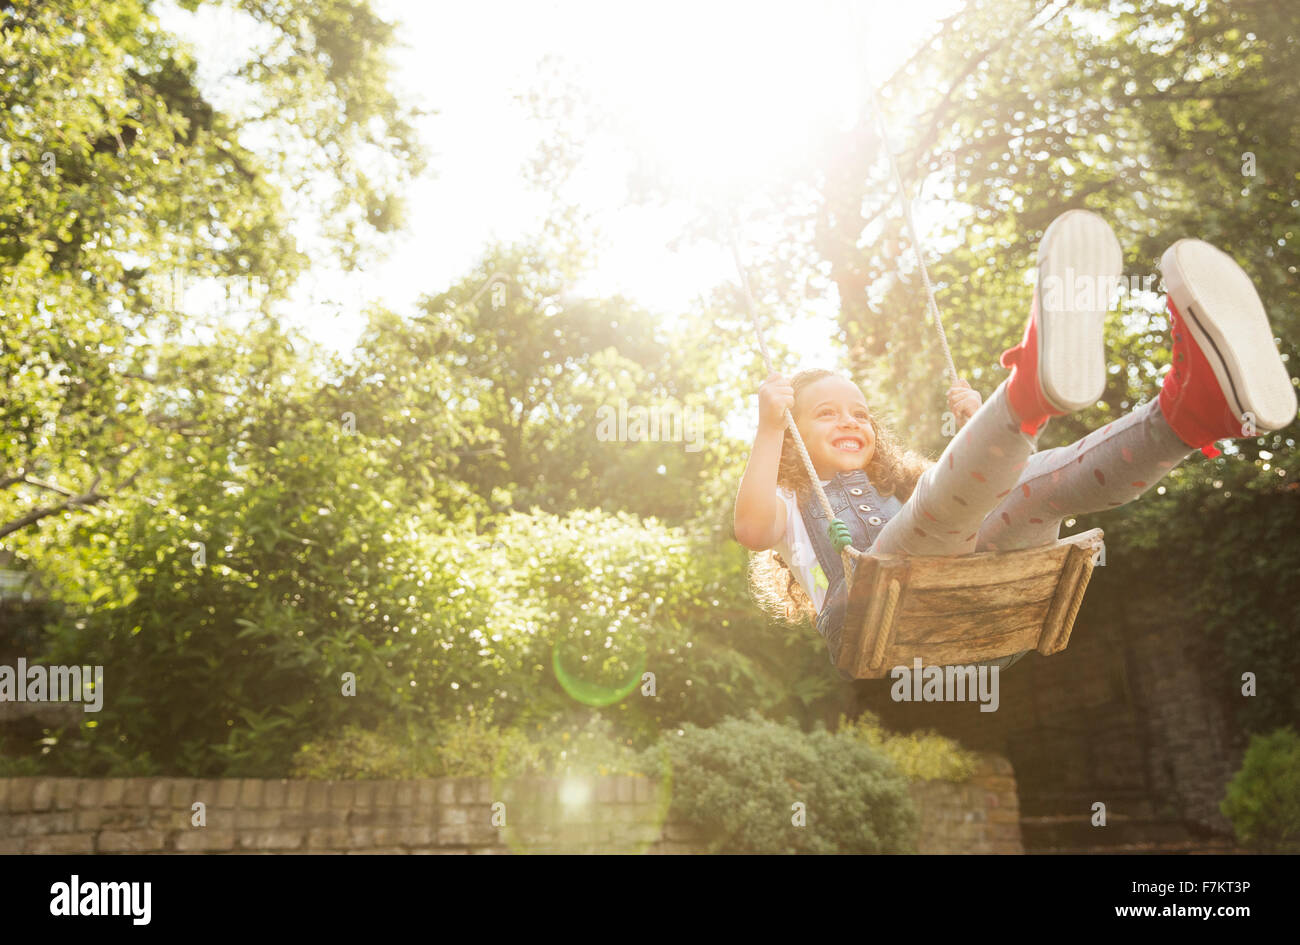 Carefree girl swinging in sunny backyard Stock Photo